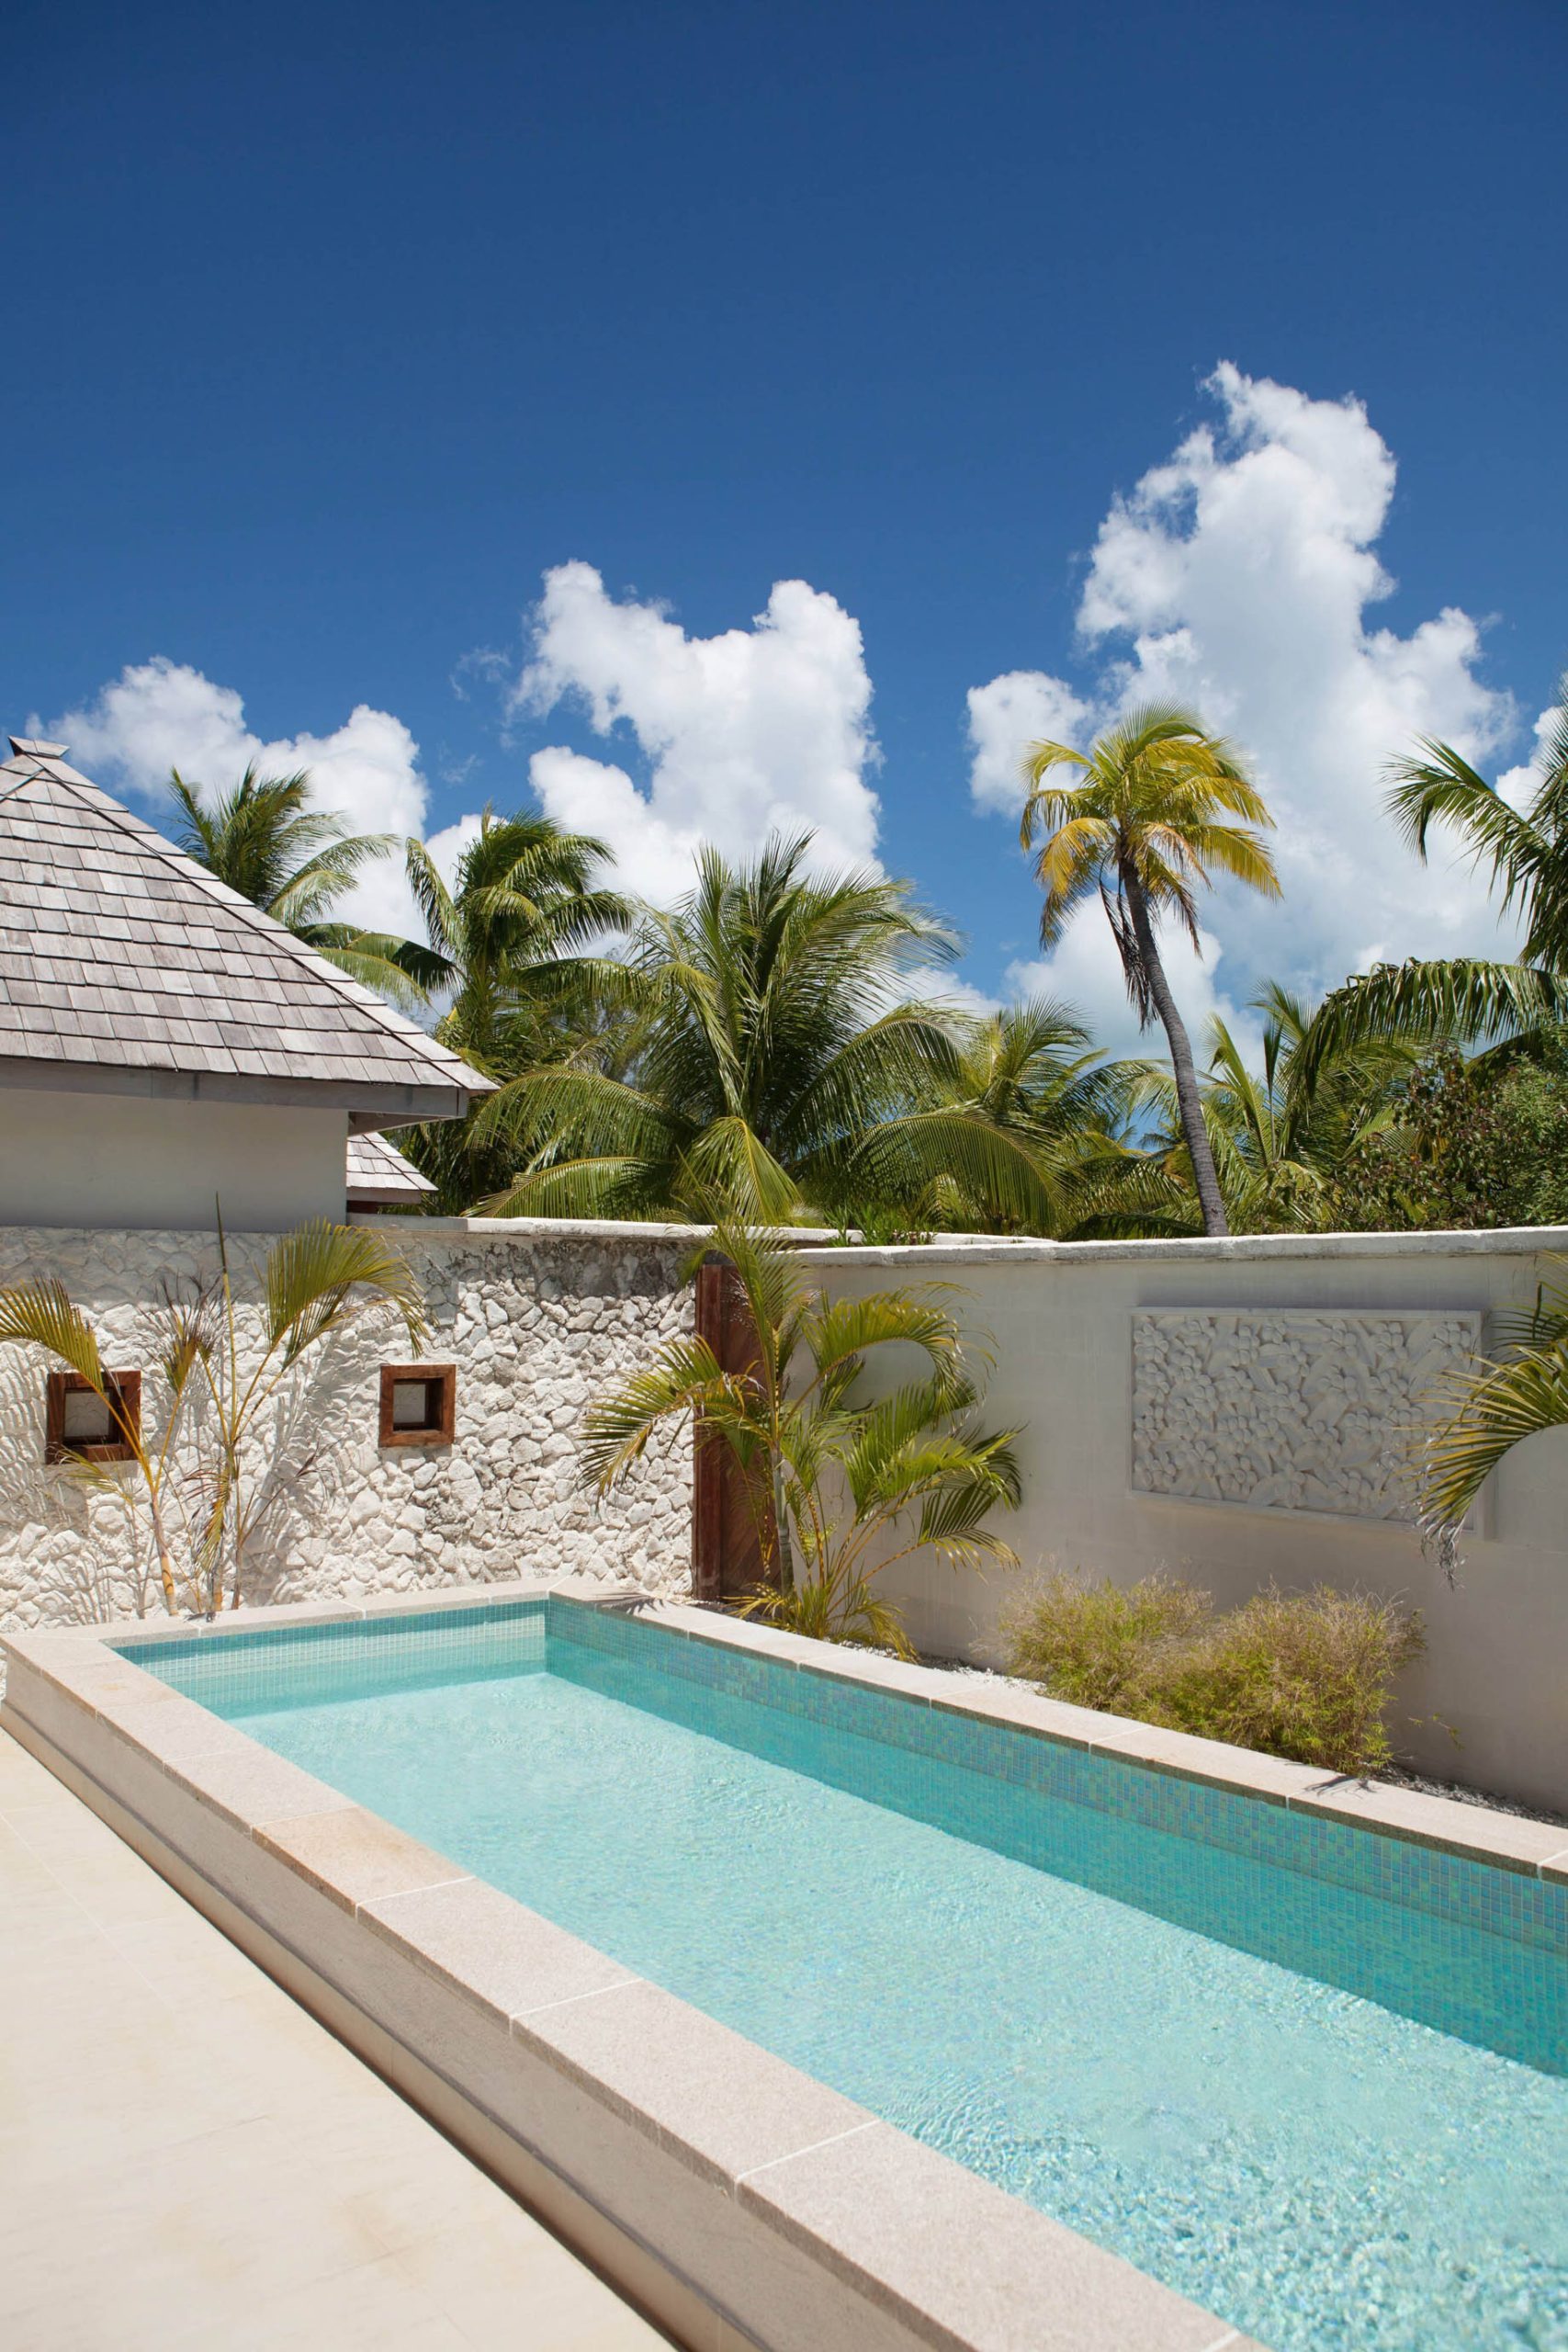 The St. Regis Bora Bora Resort – Bora Bora, French Polynesia – Iridium Spa Treatment Area Pool